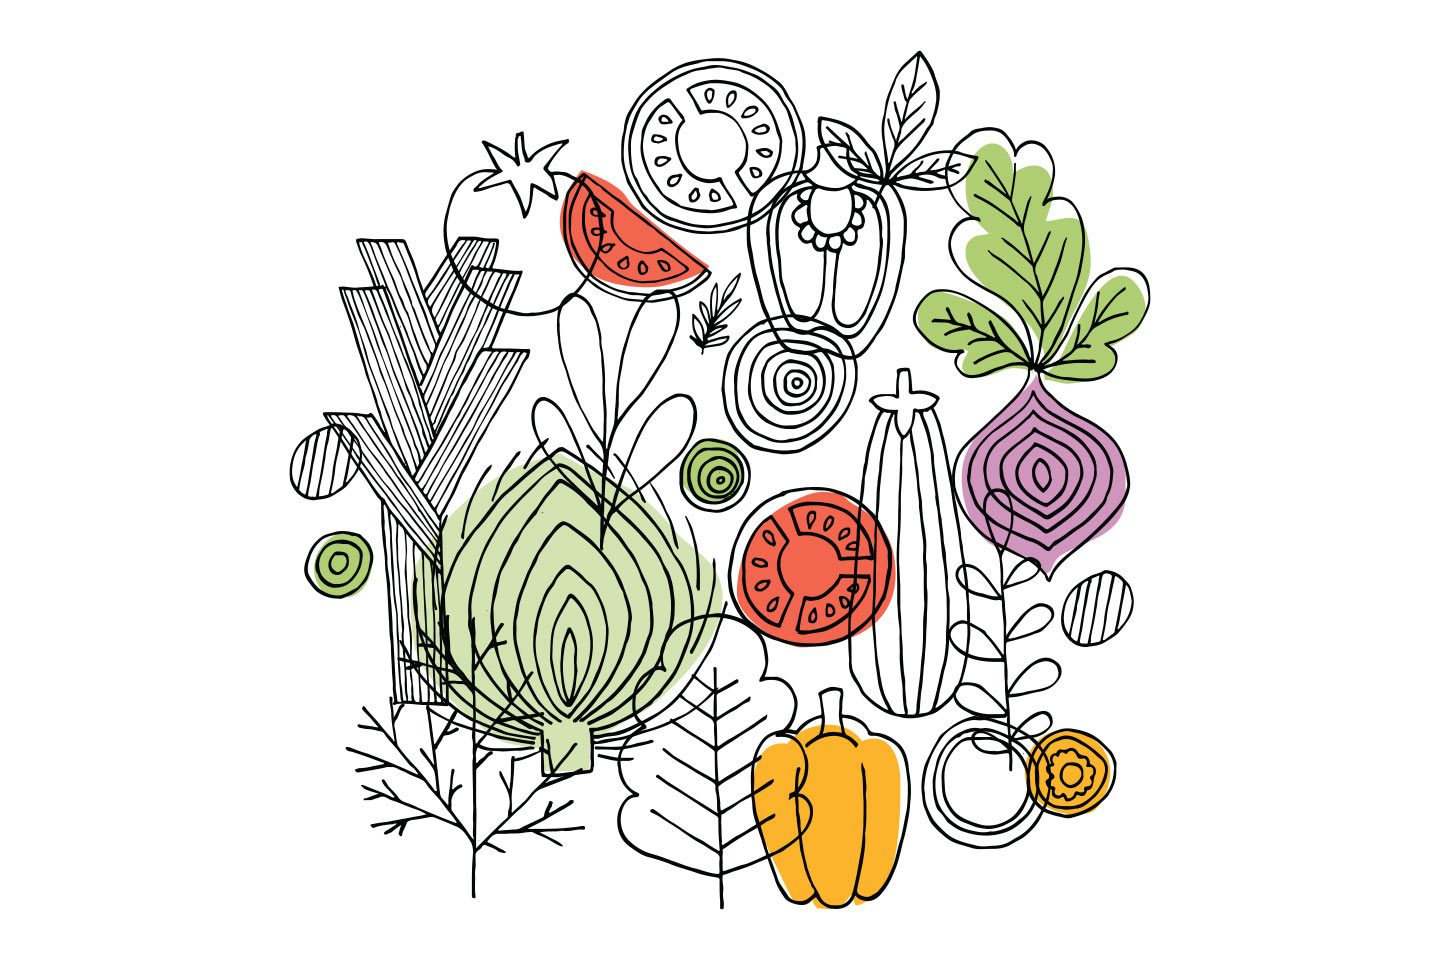 Illustration of veggies